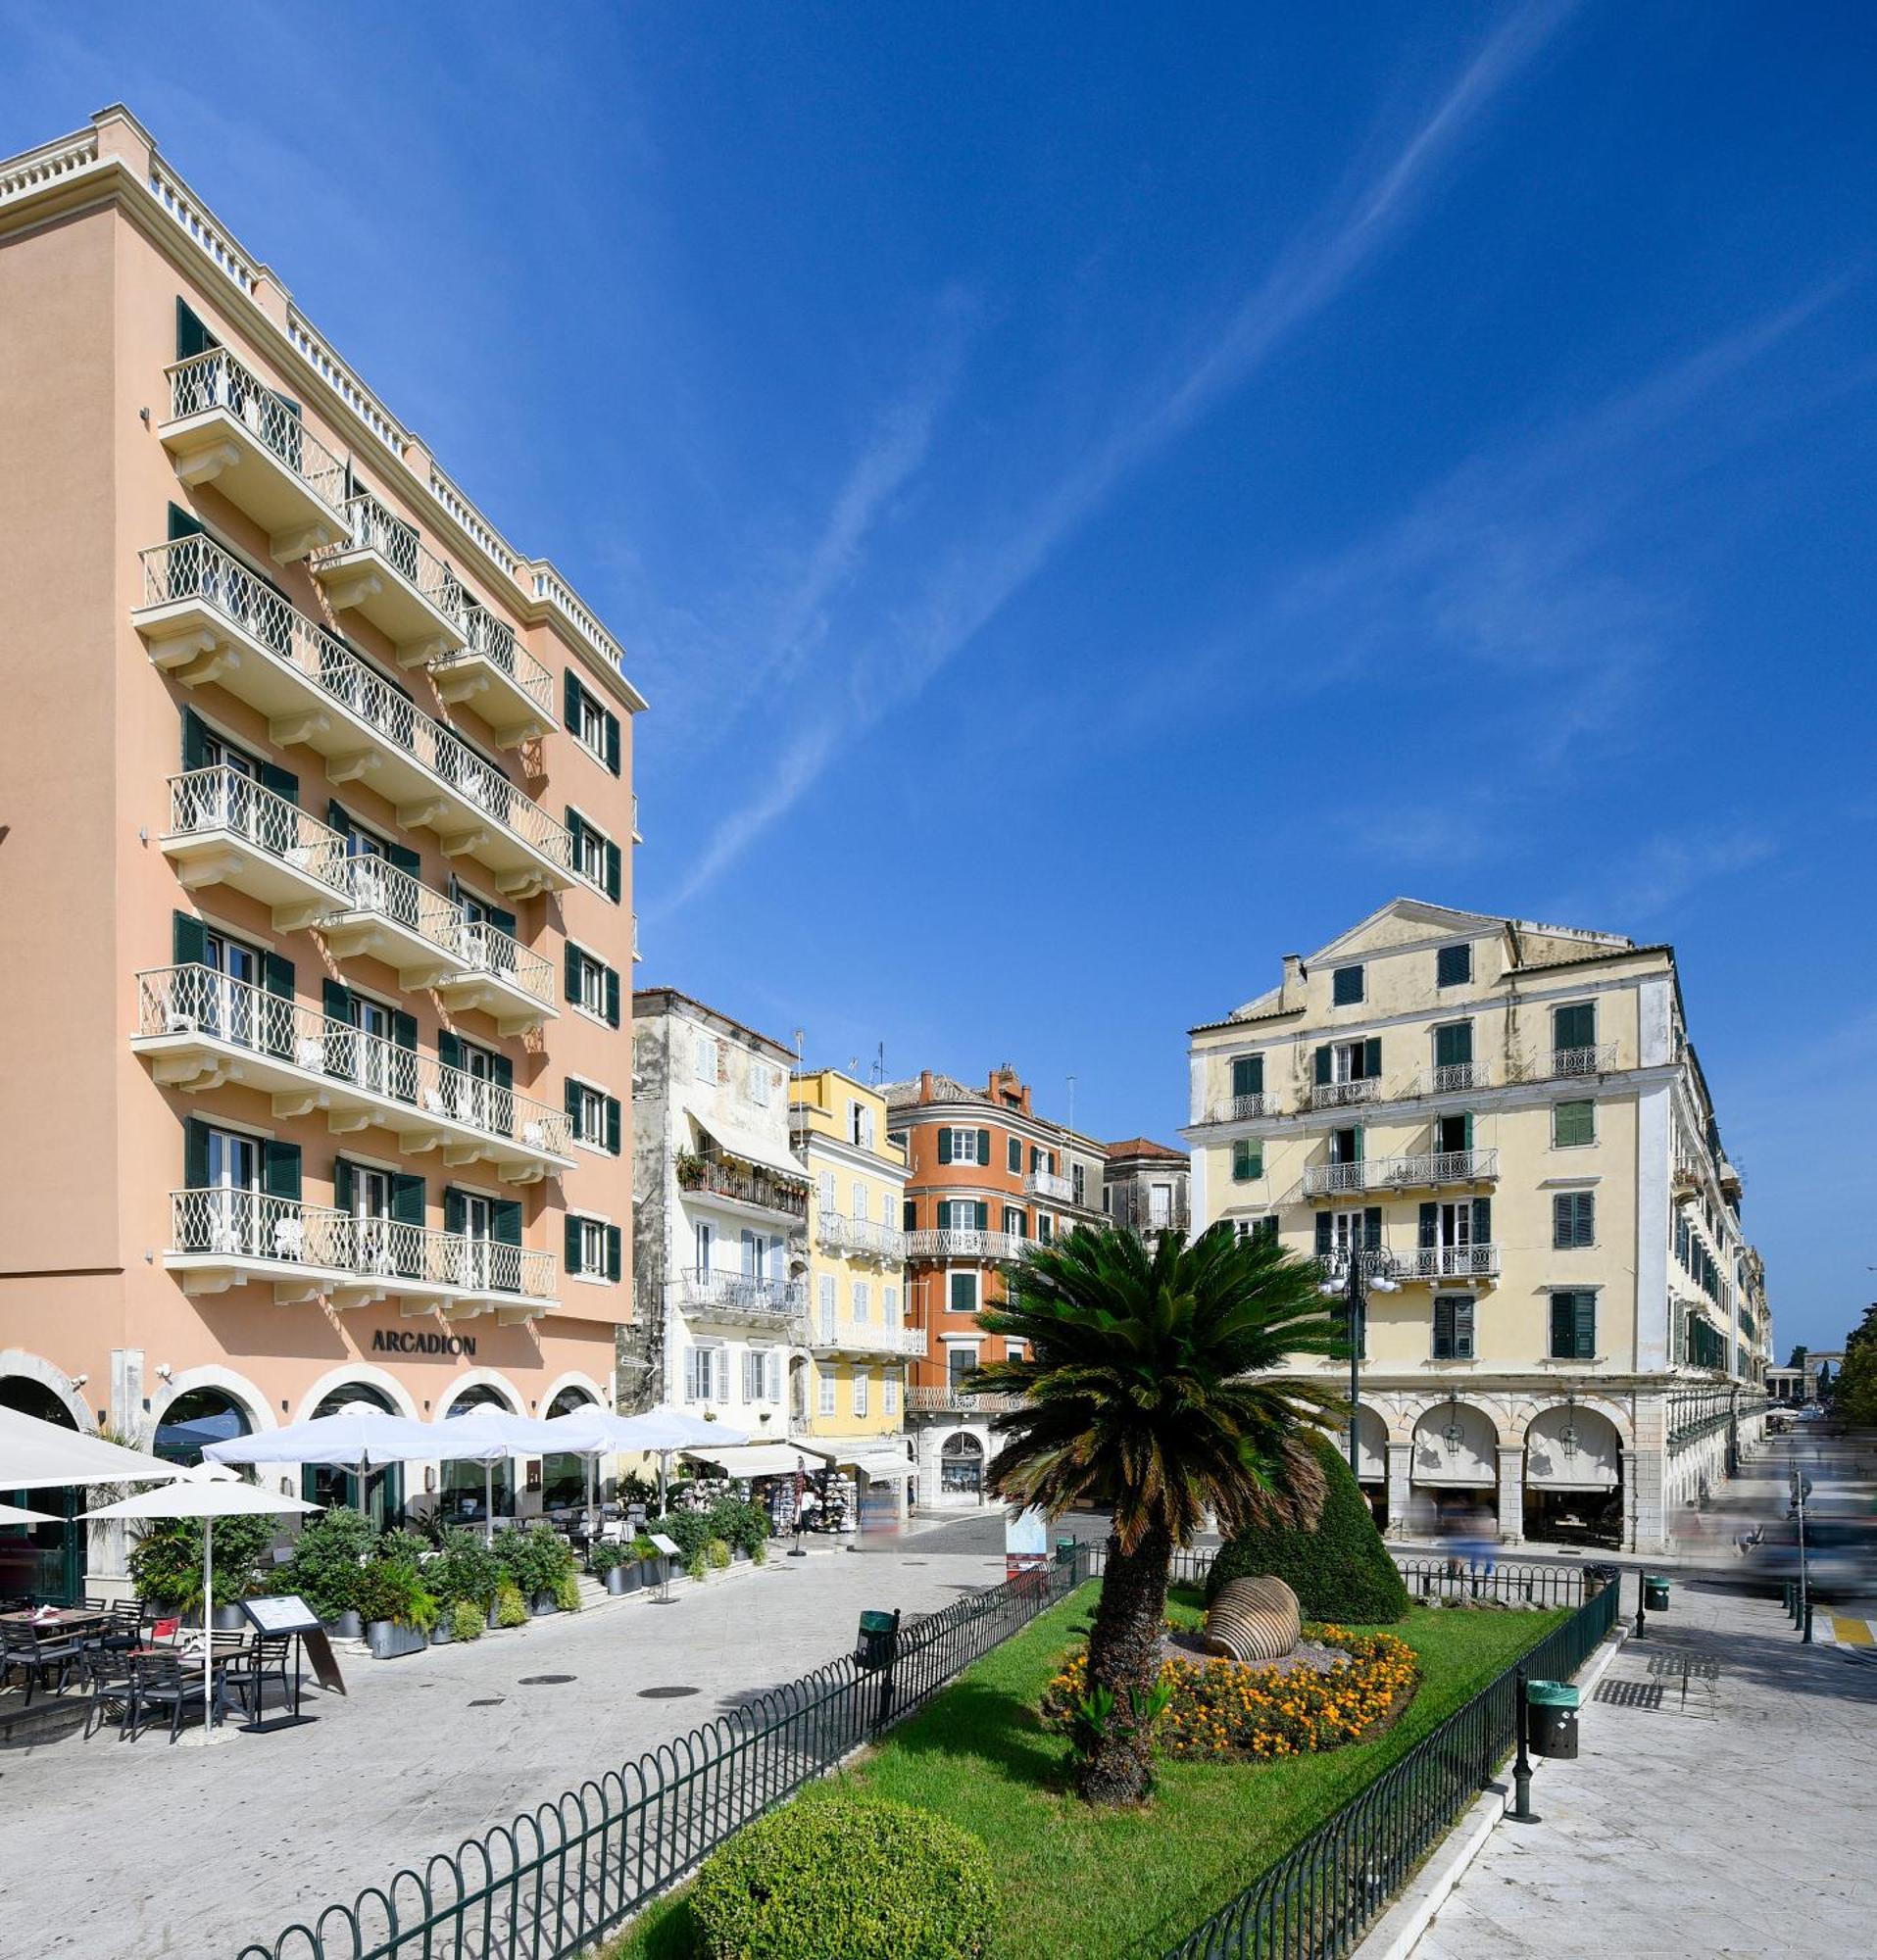 Arcadion Hotel Corfu  Exterior photo